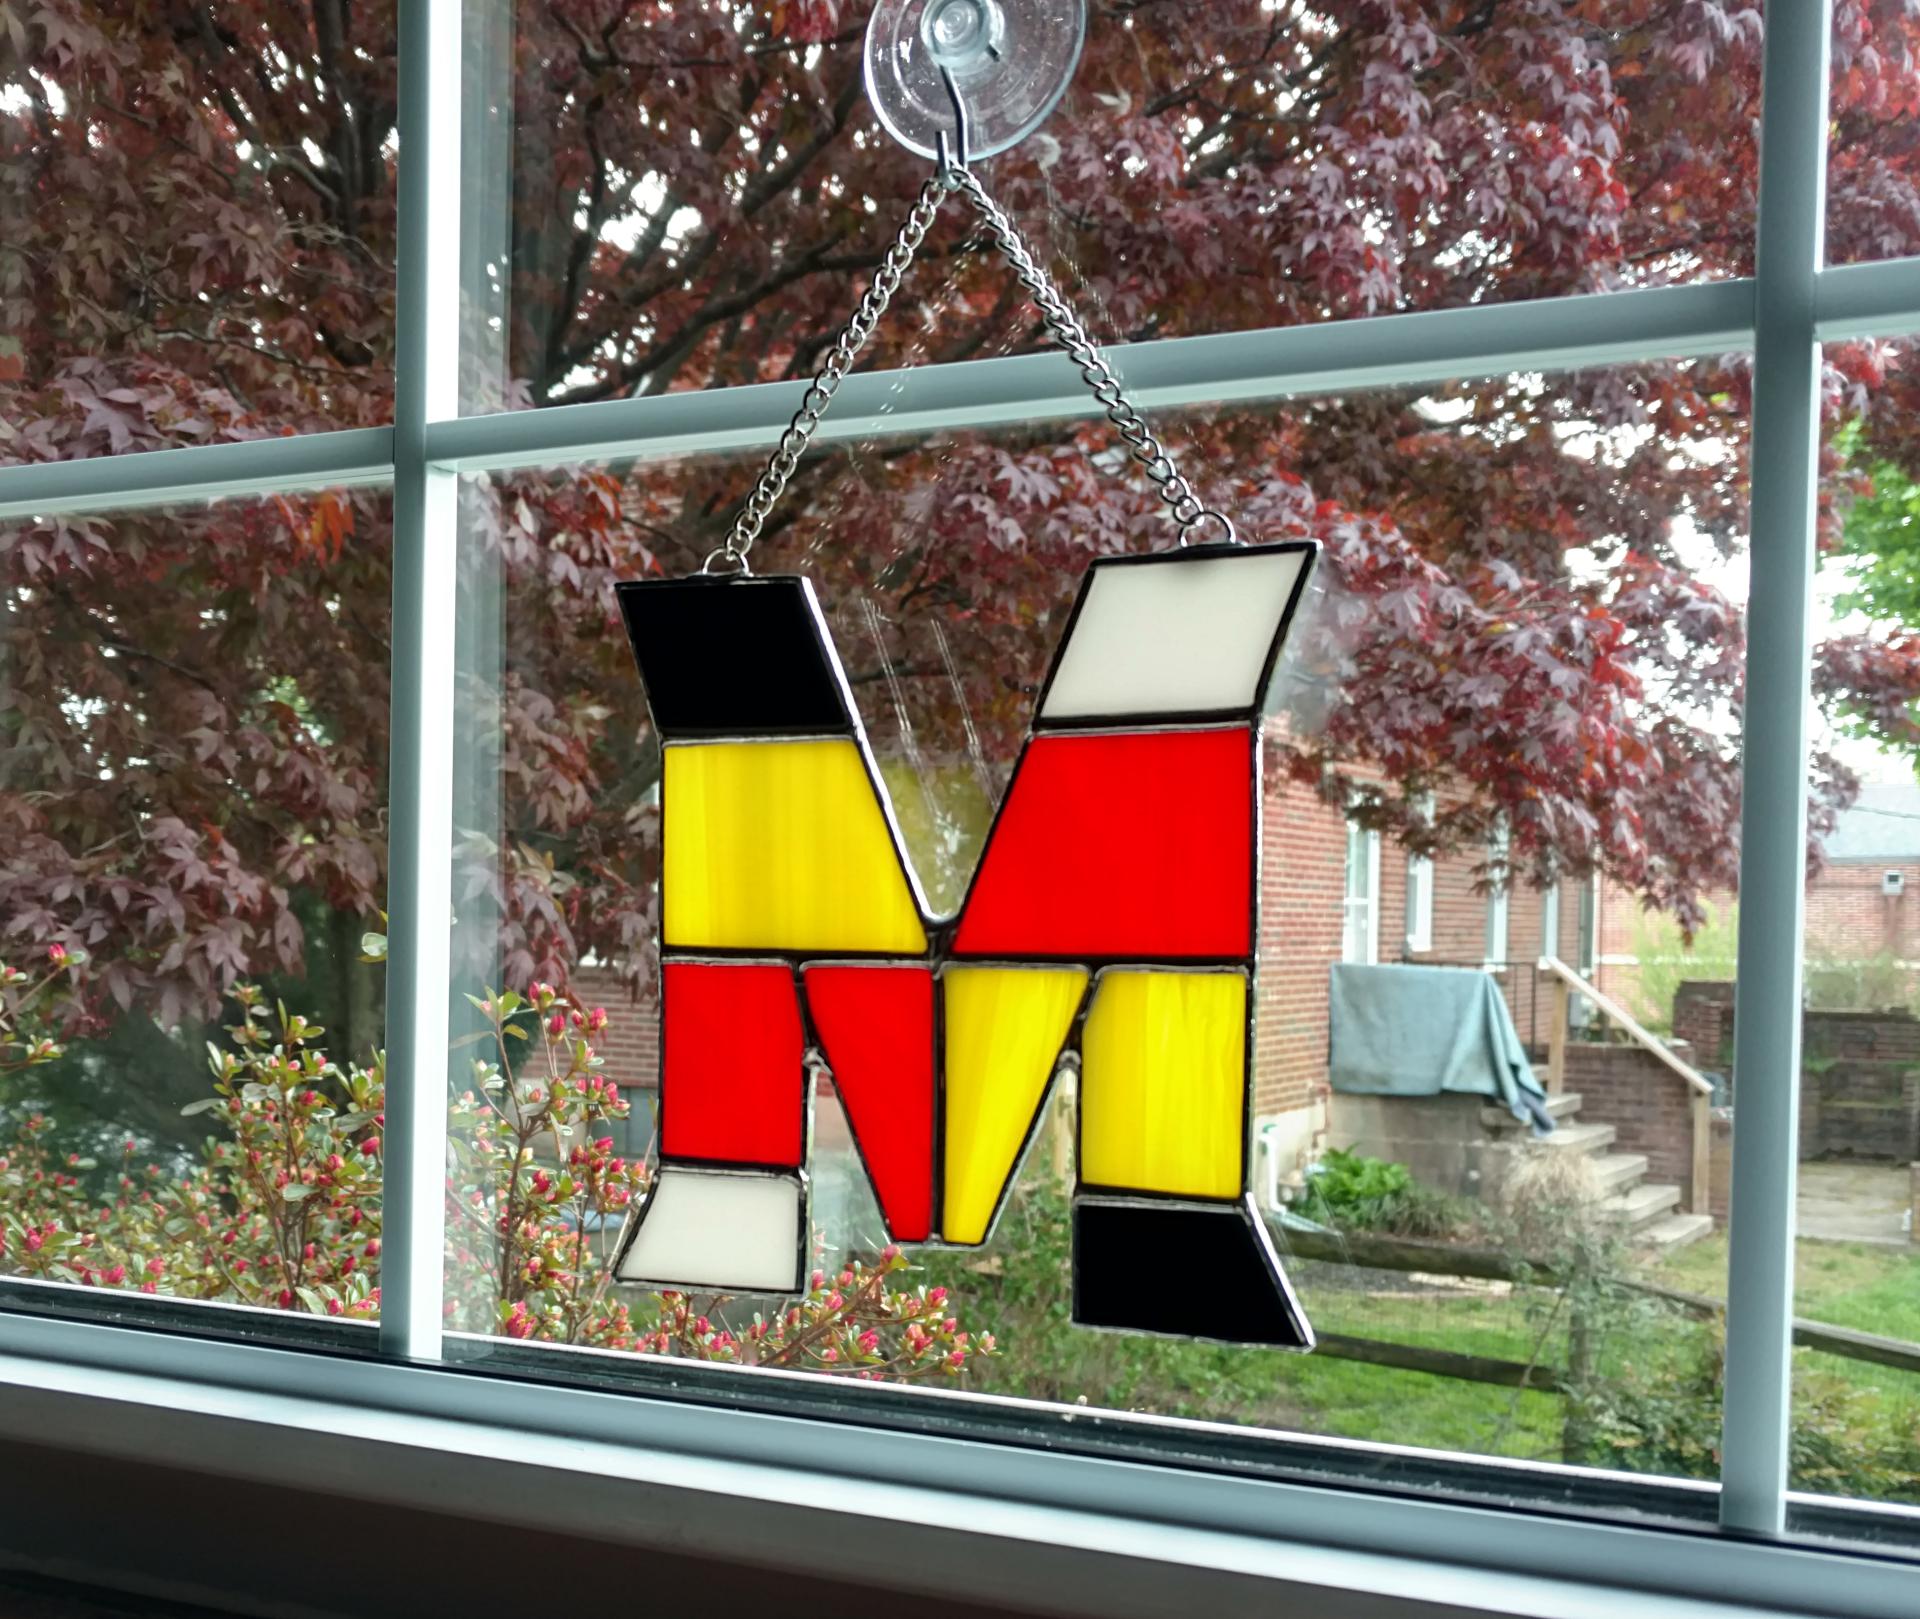 Maryland Pride Stained Glass Suncatcher, University of Maryland Decor, Alumnus Student Gift, Initial M